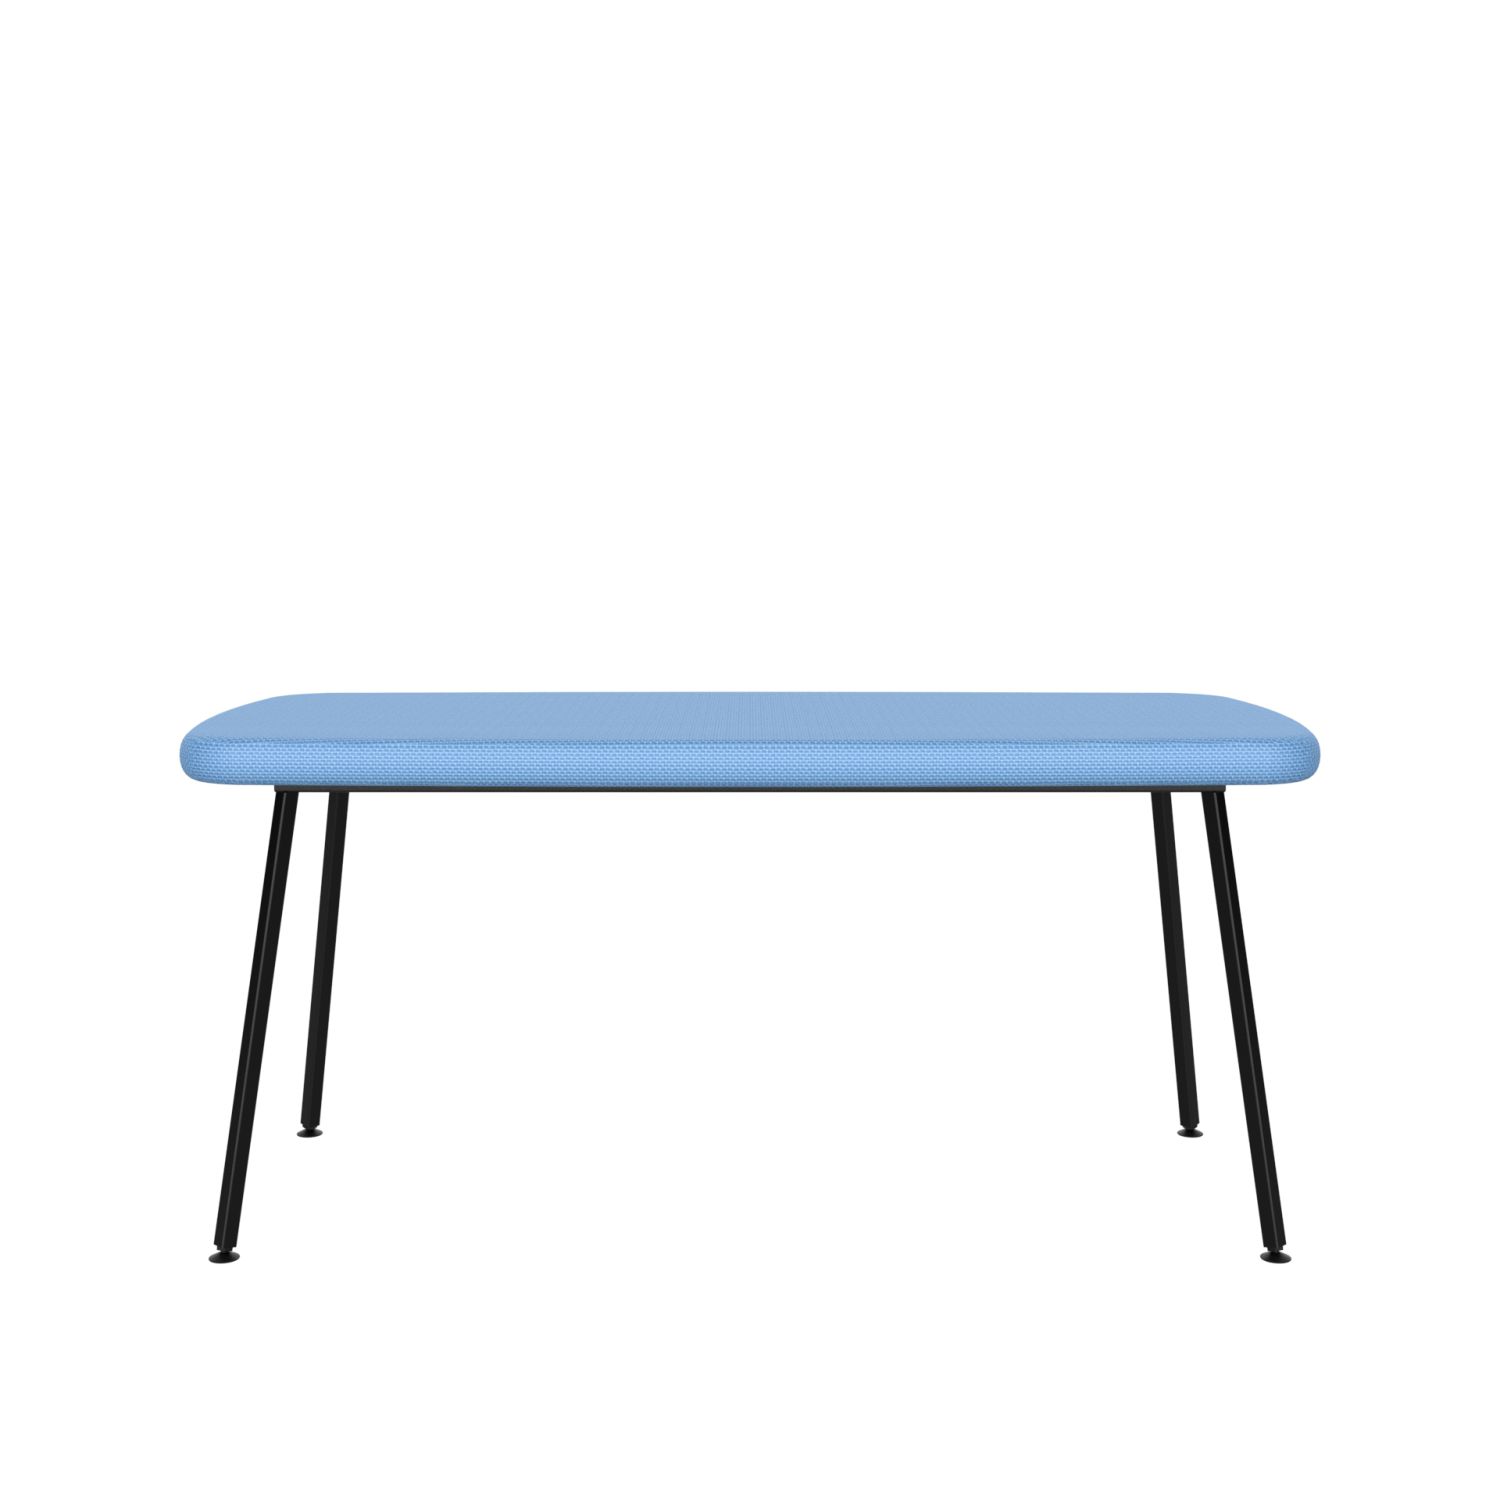 lensvelt maarten baas bench not stackable without armrests blue horizon 040 hard leg ends